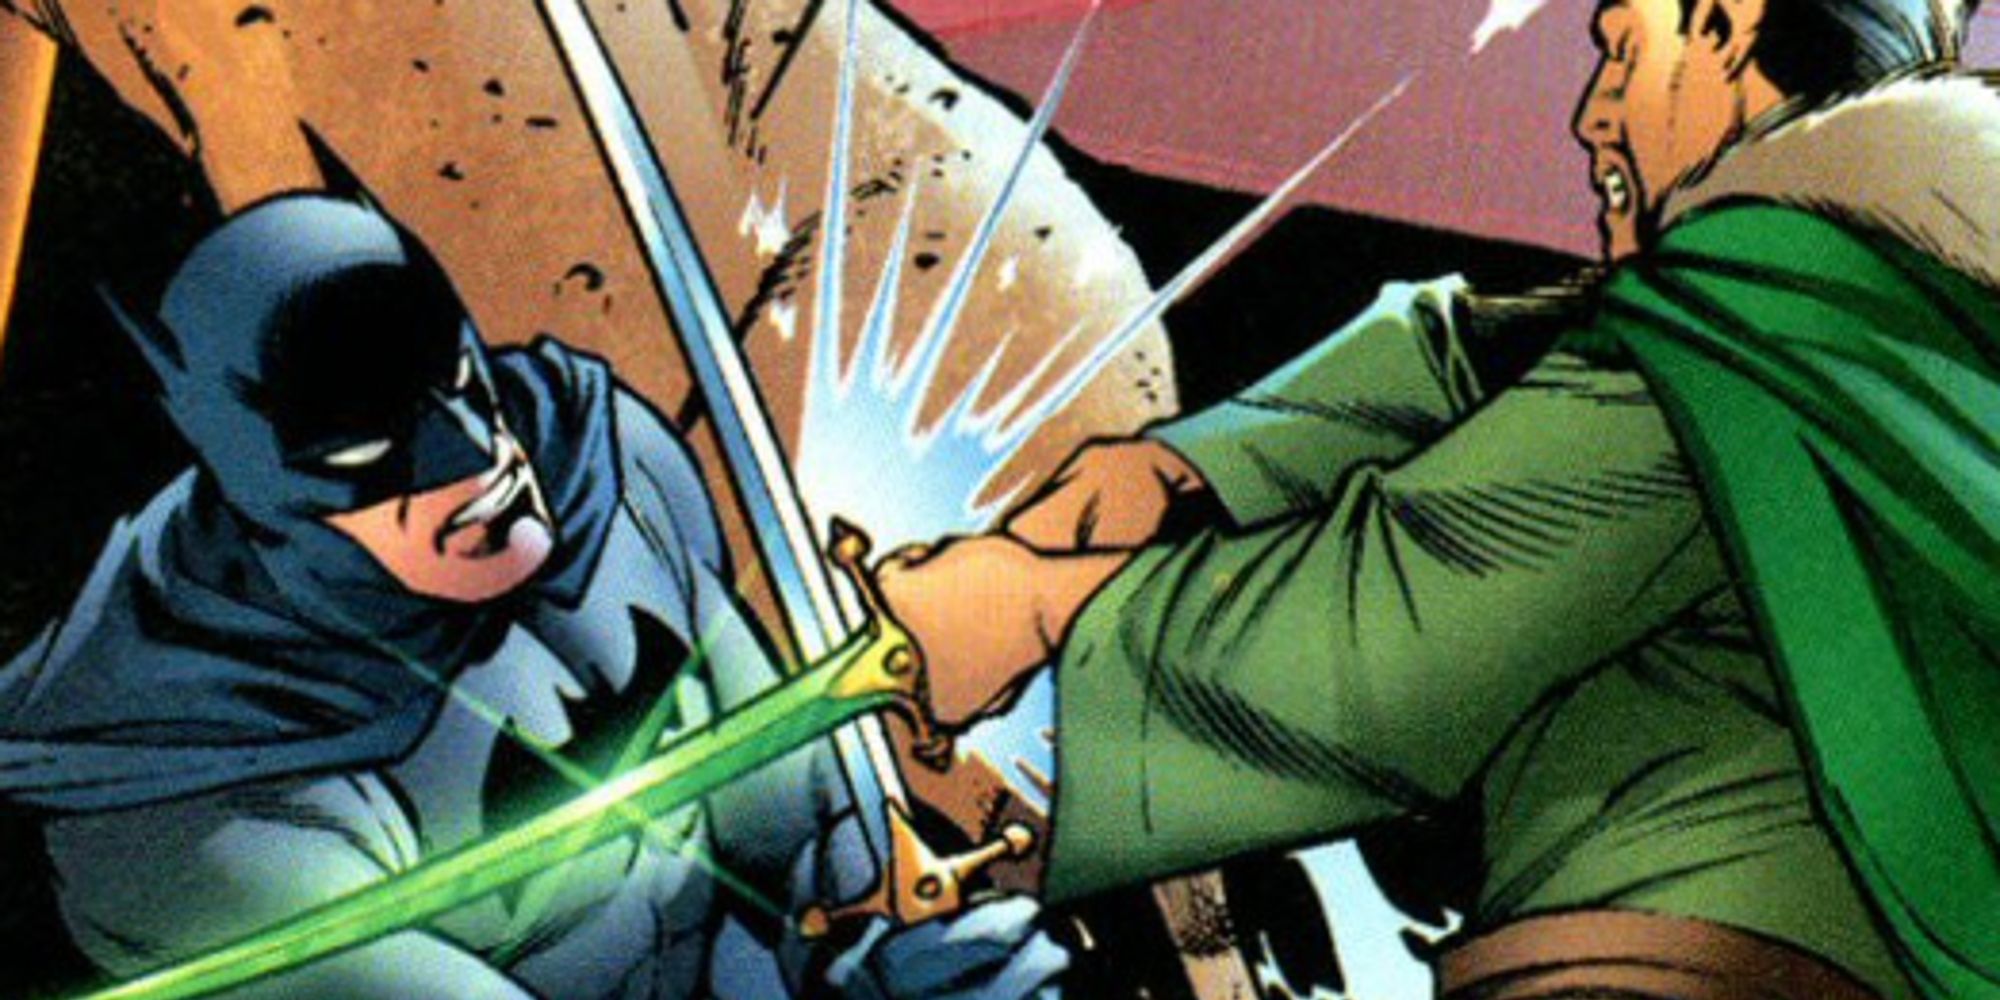 Batman fighting Ra's Al Ghul with a sword in DC